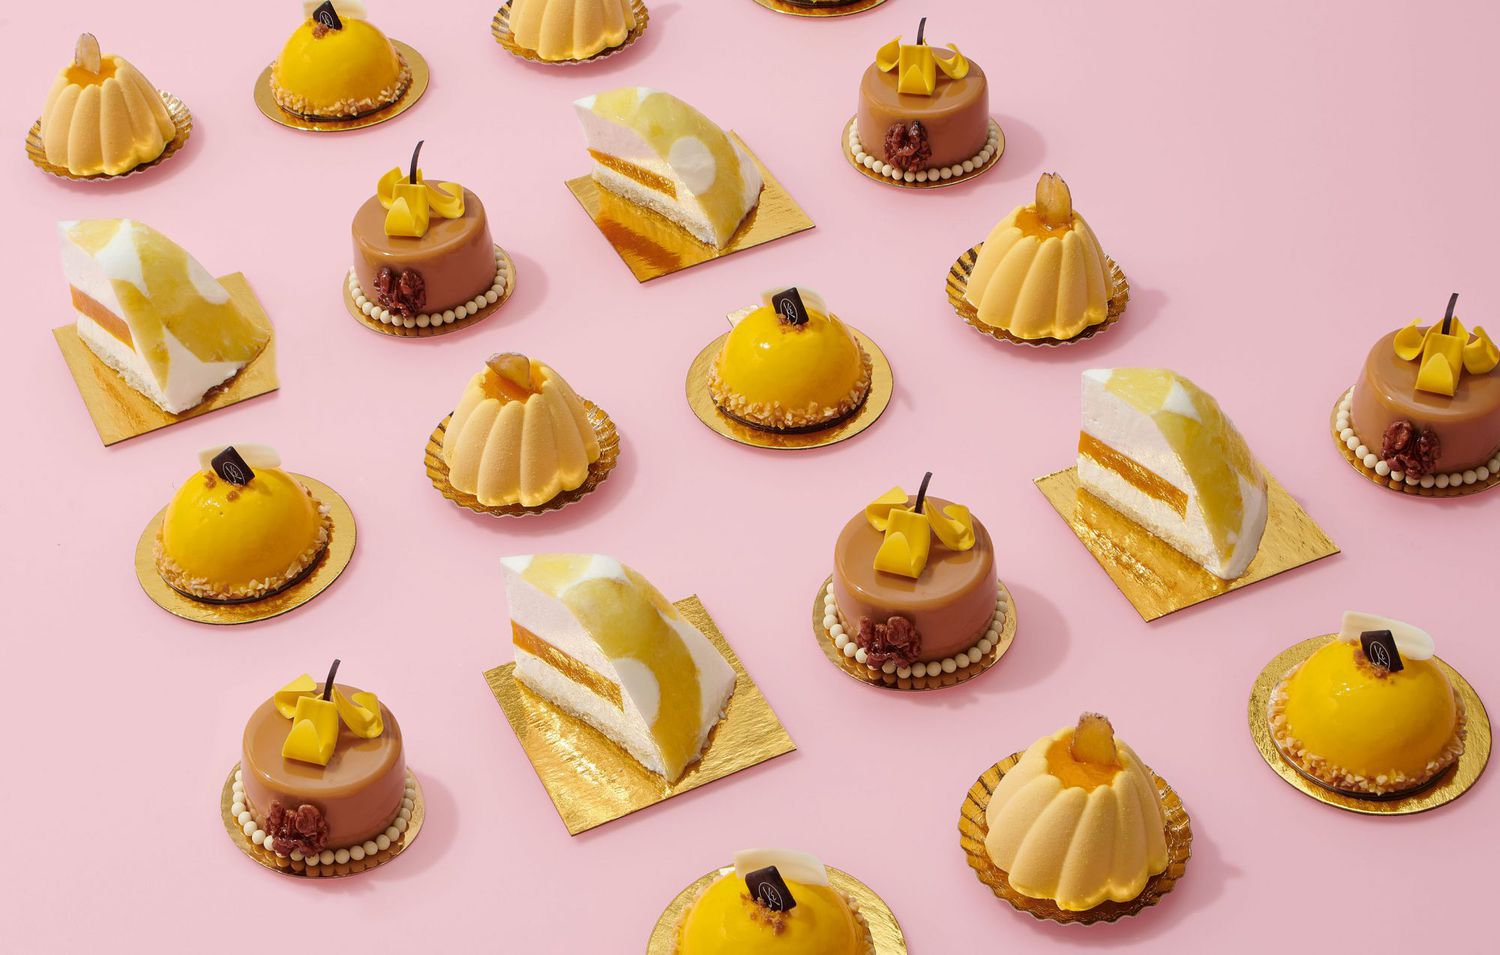 Mini Wedding Desserts Your Guests Will Go Crazy Over Martha Stewart